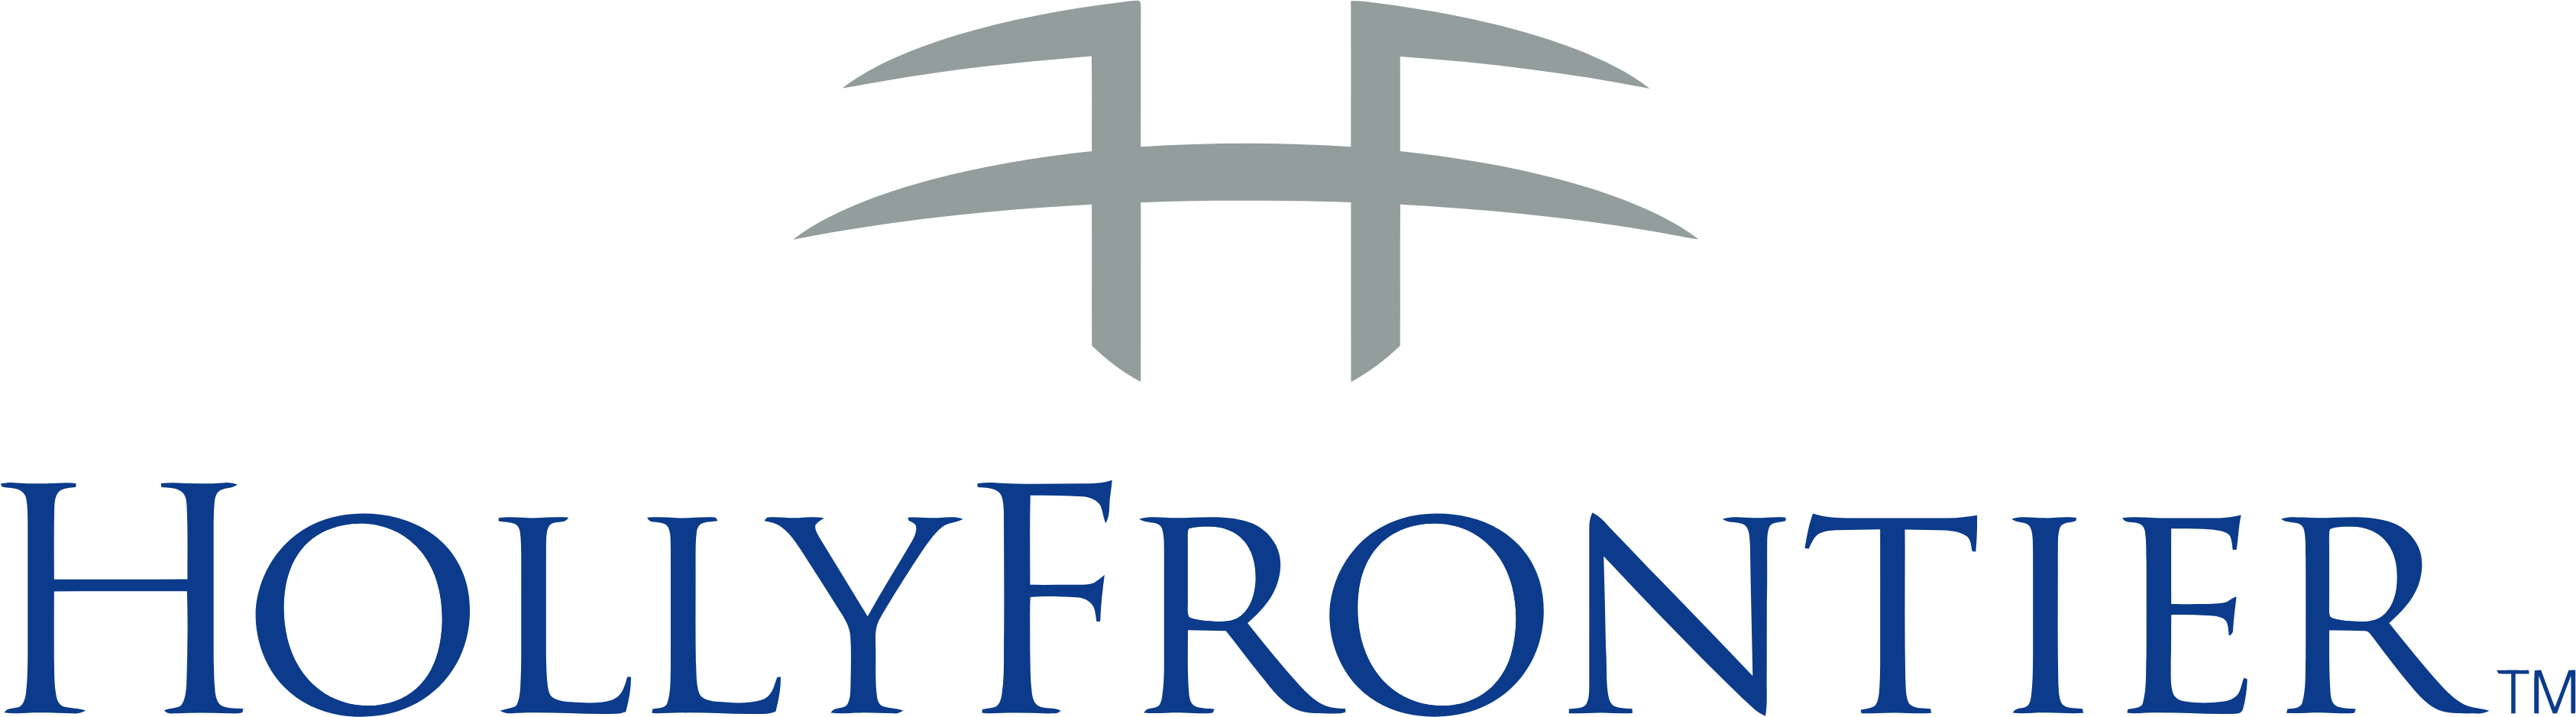 HollyFrontier logo large (transparent PNG)